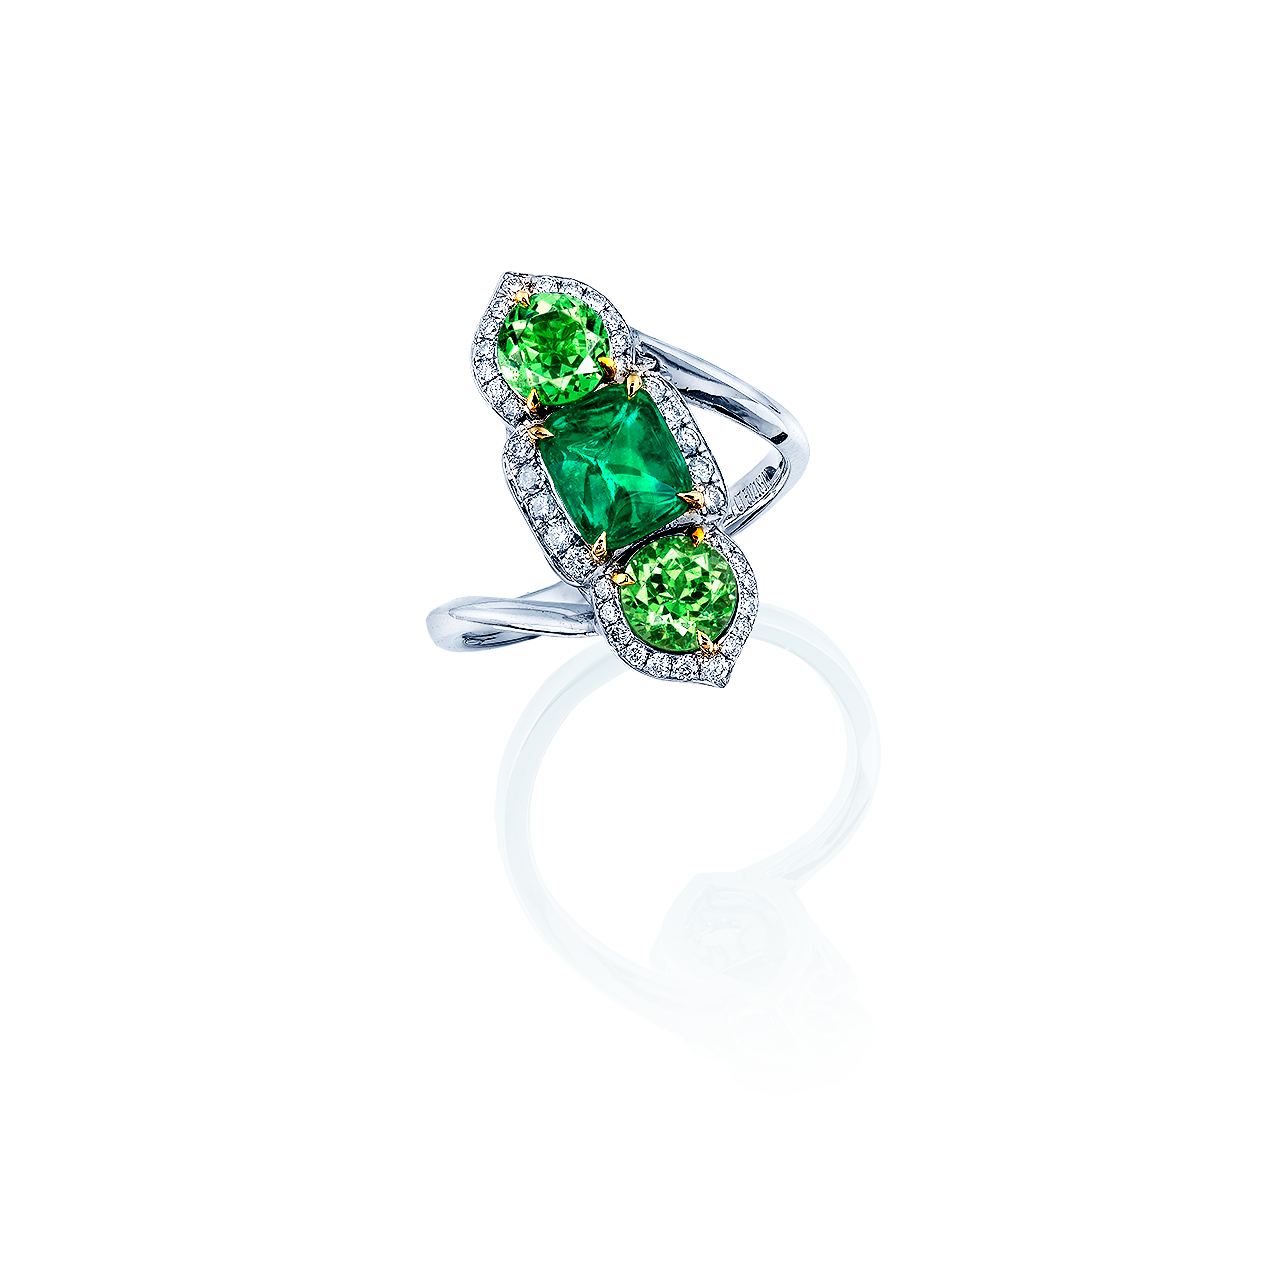 1.27 克拉 祖母綠戒
Emerald and Diamond Ring